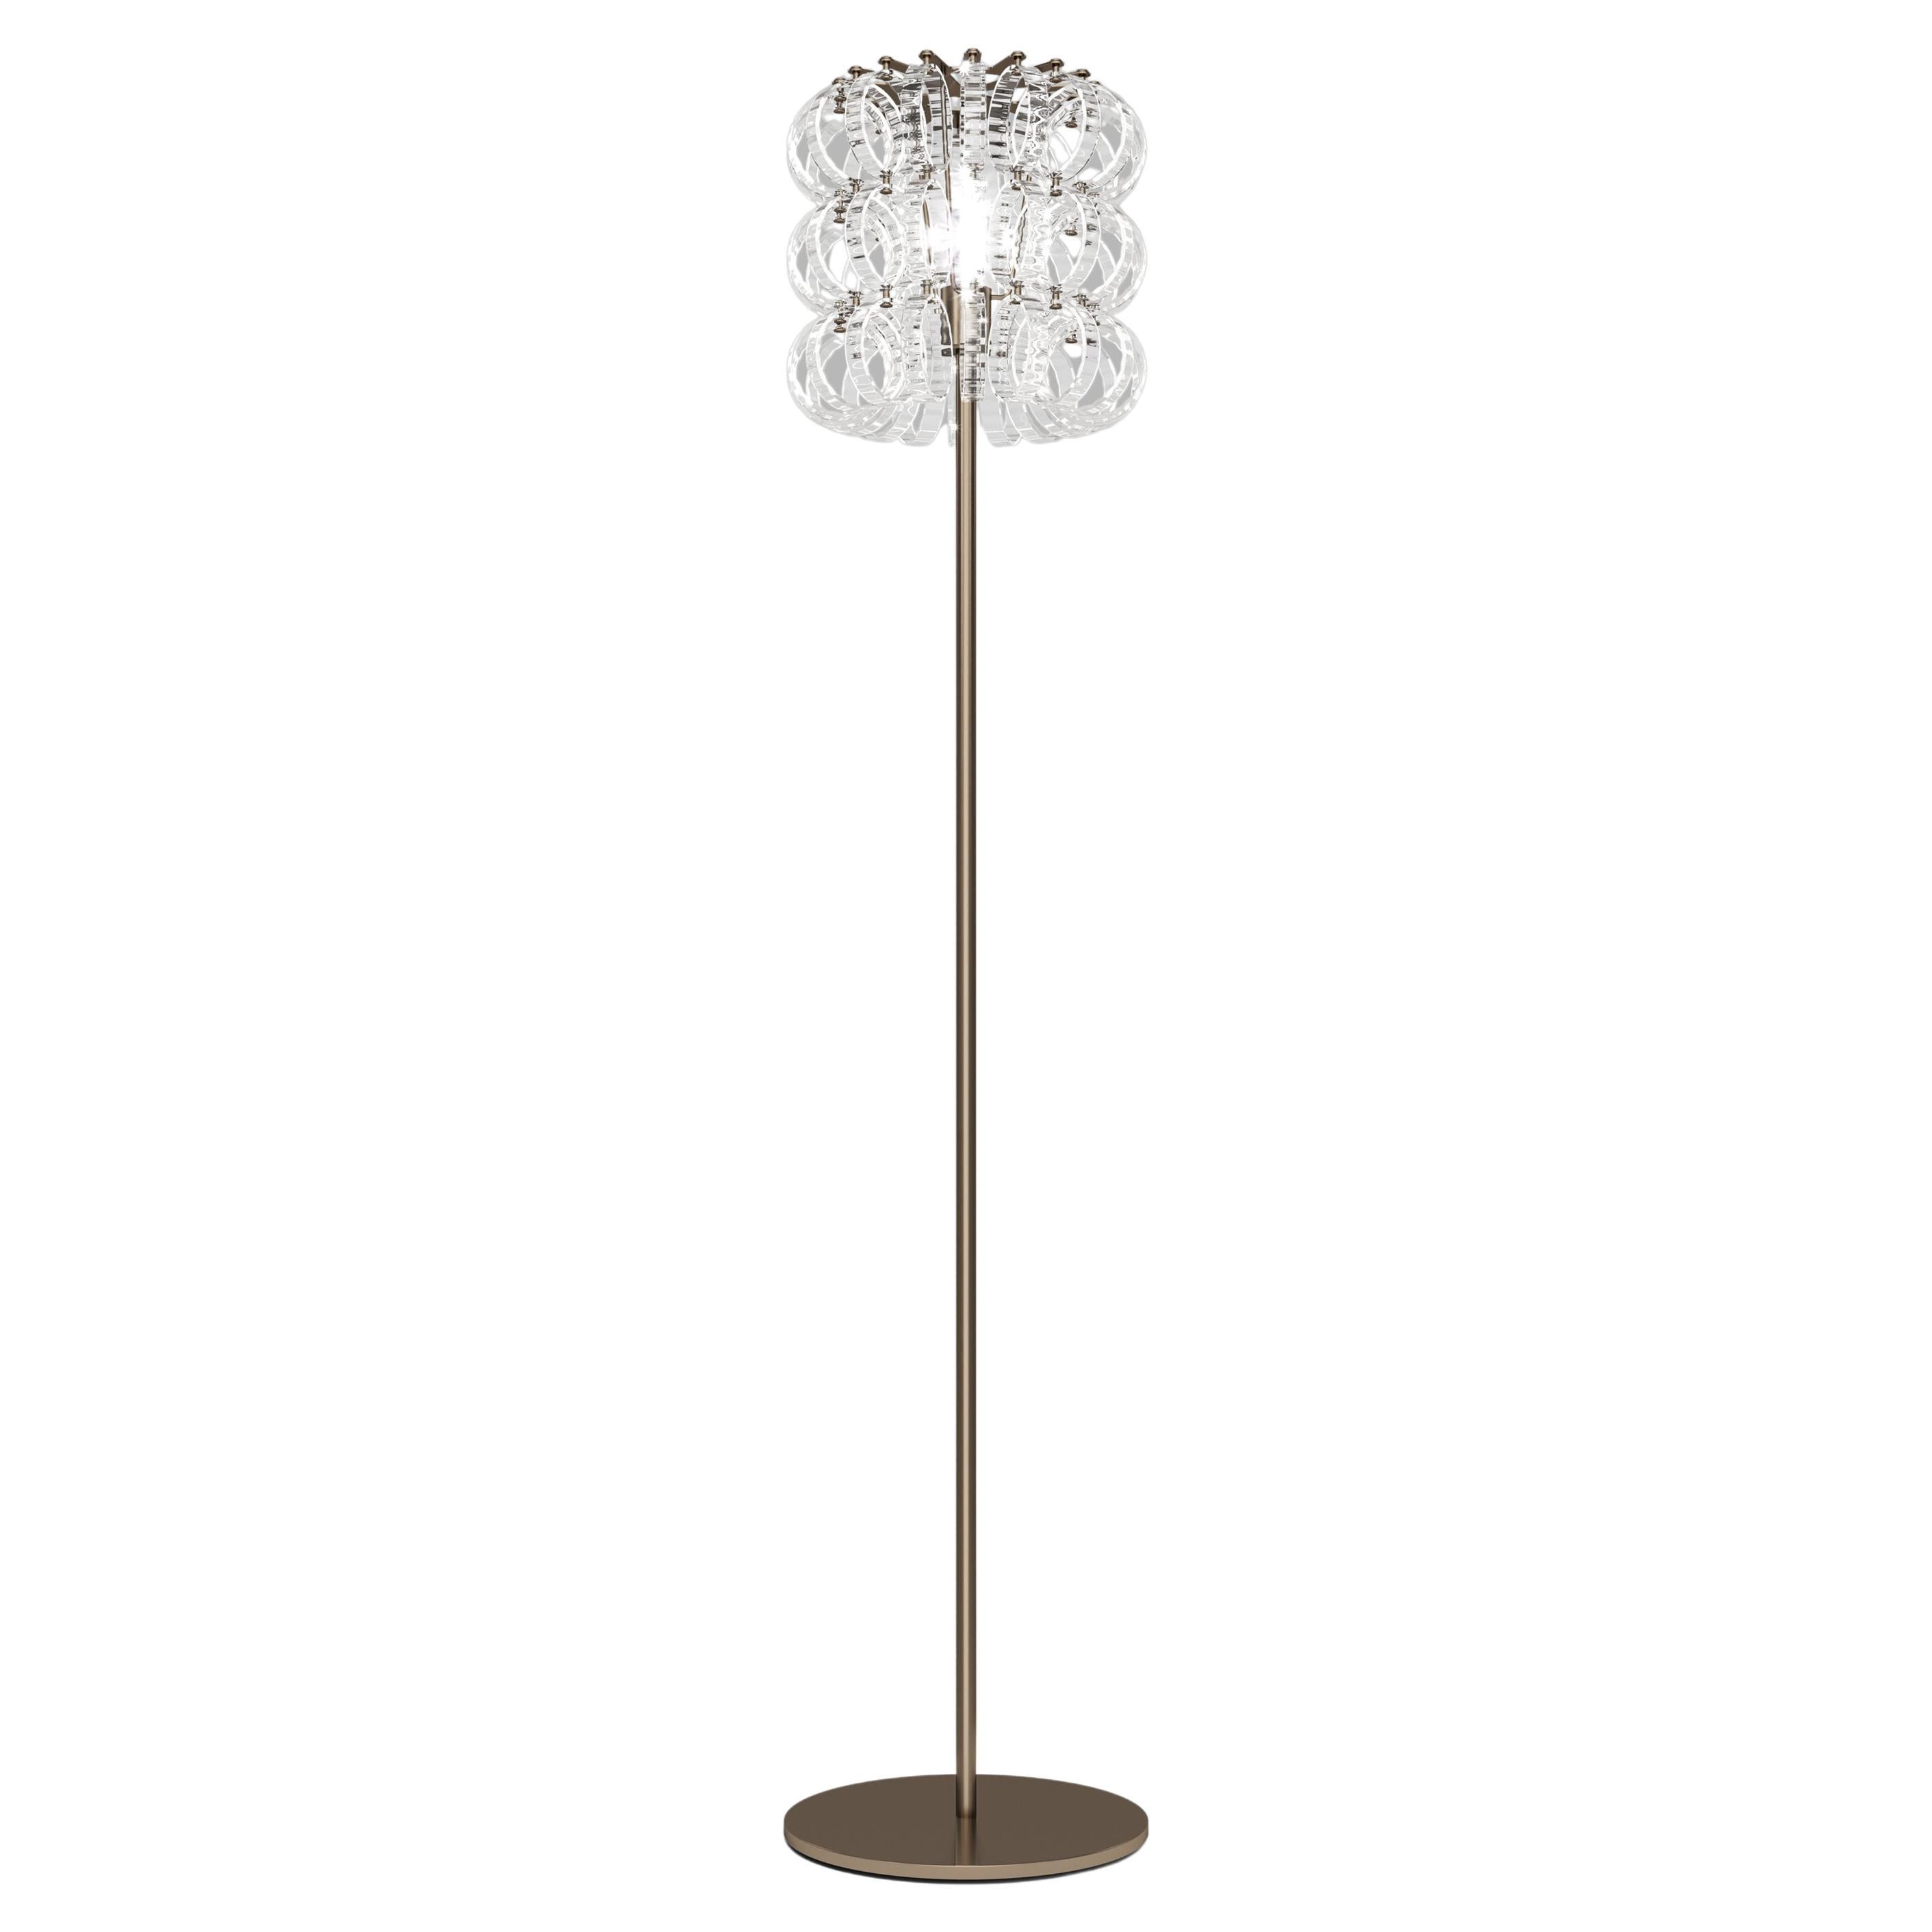 Vistosi Ecos Floor Lamp in Crystal Striped Glass with Matt Bronze Frame